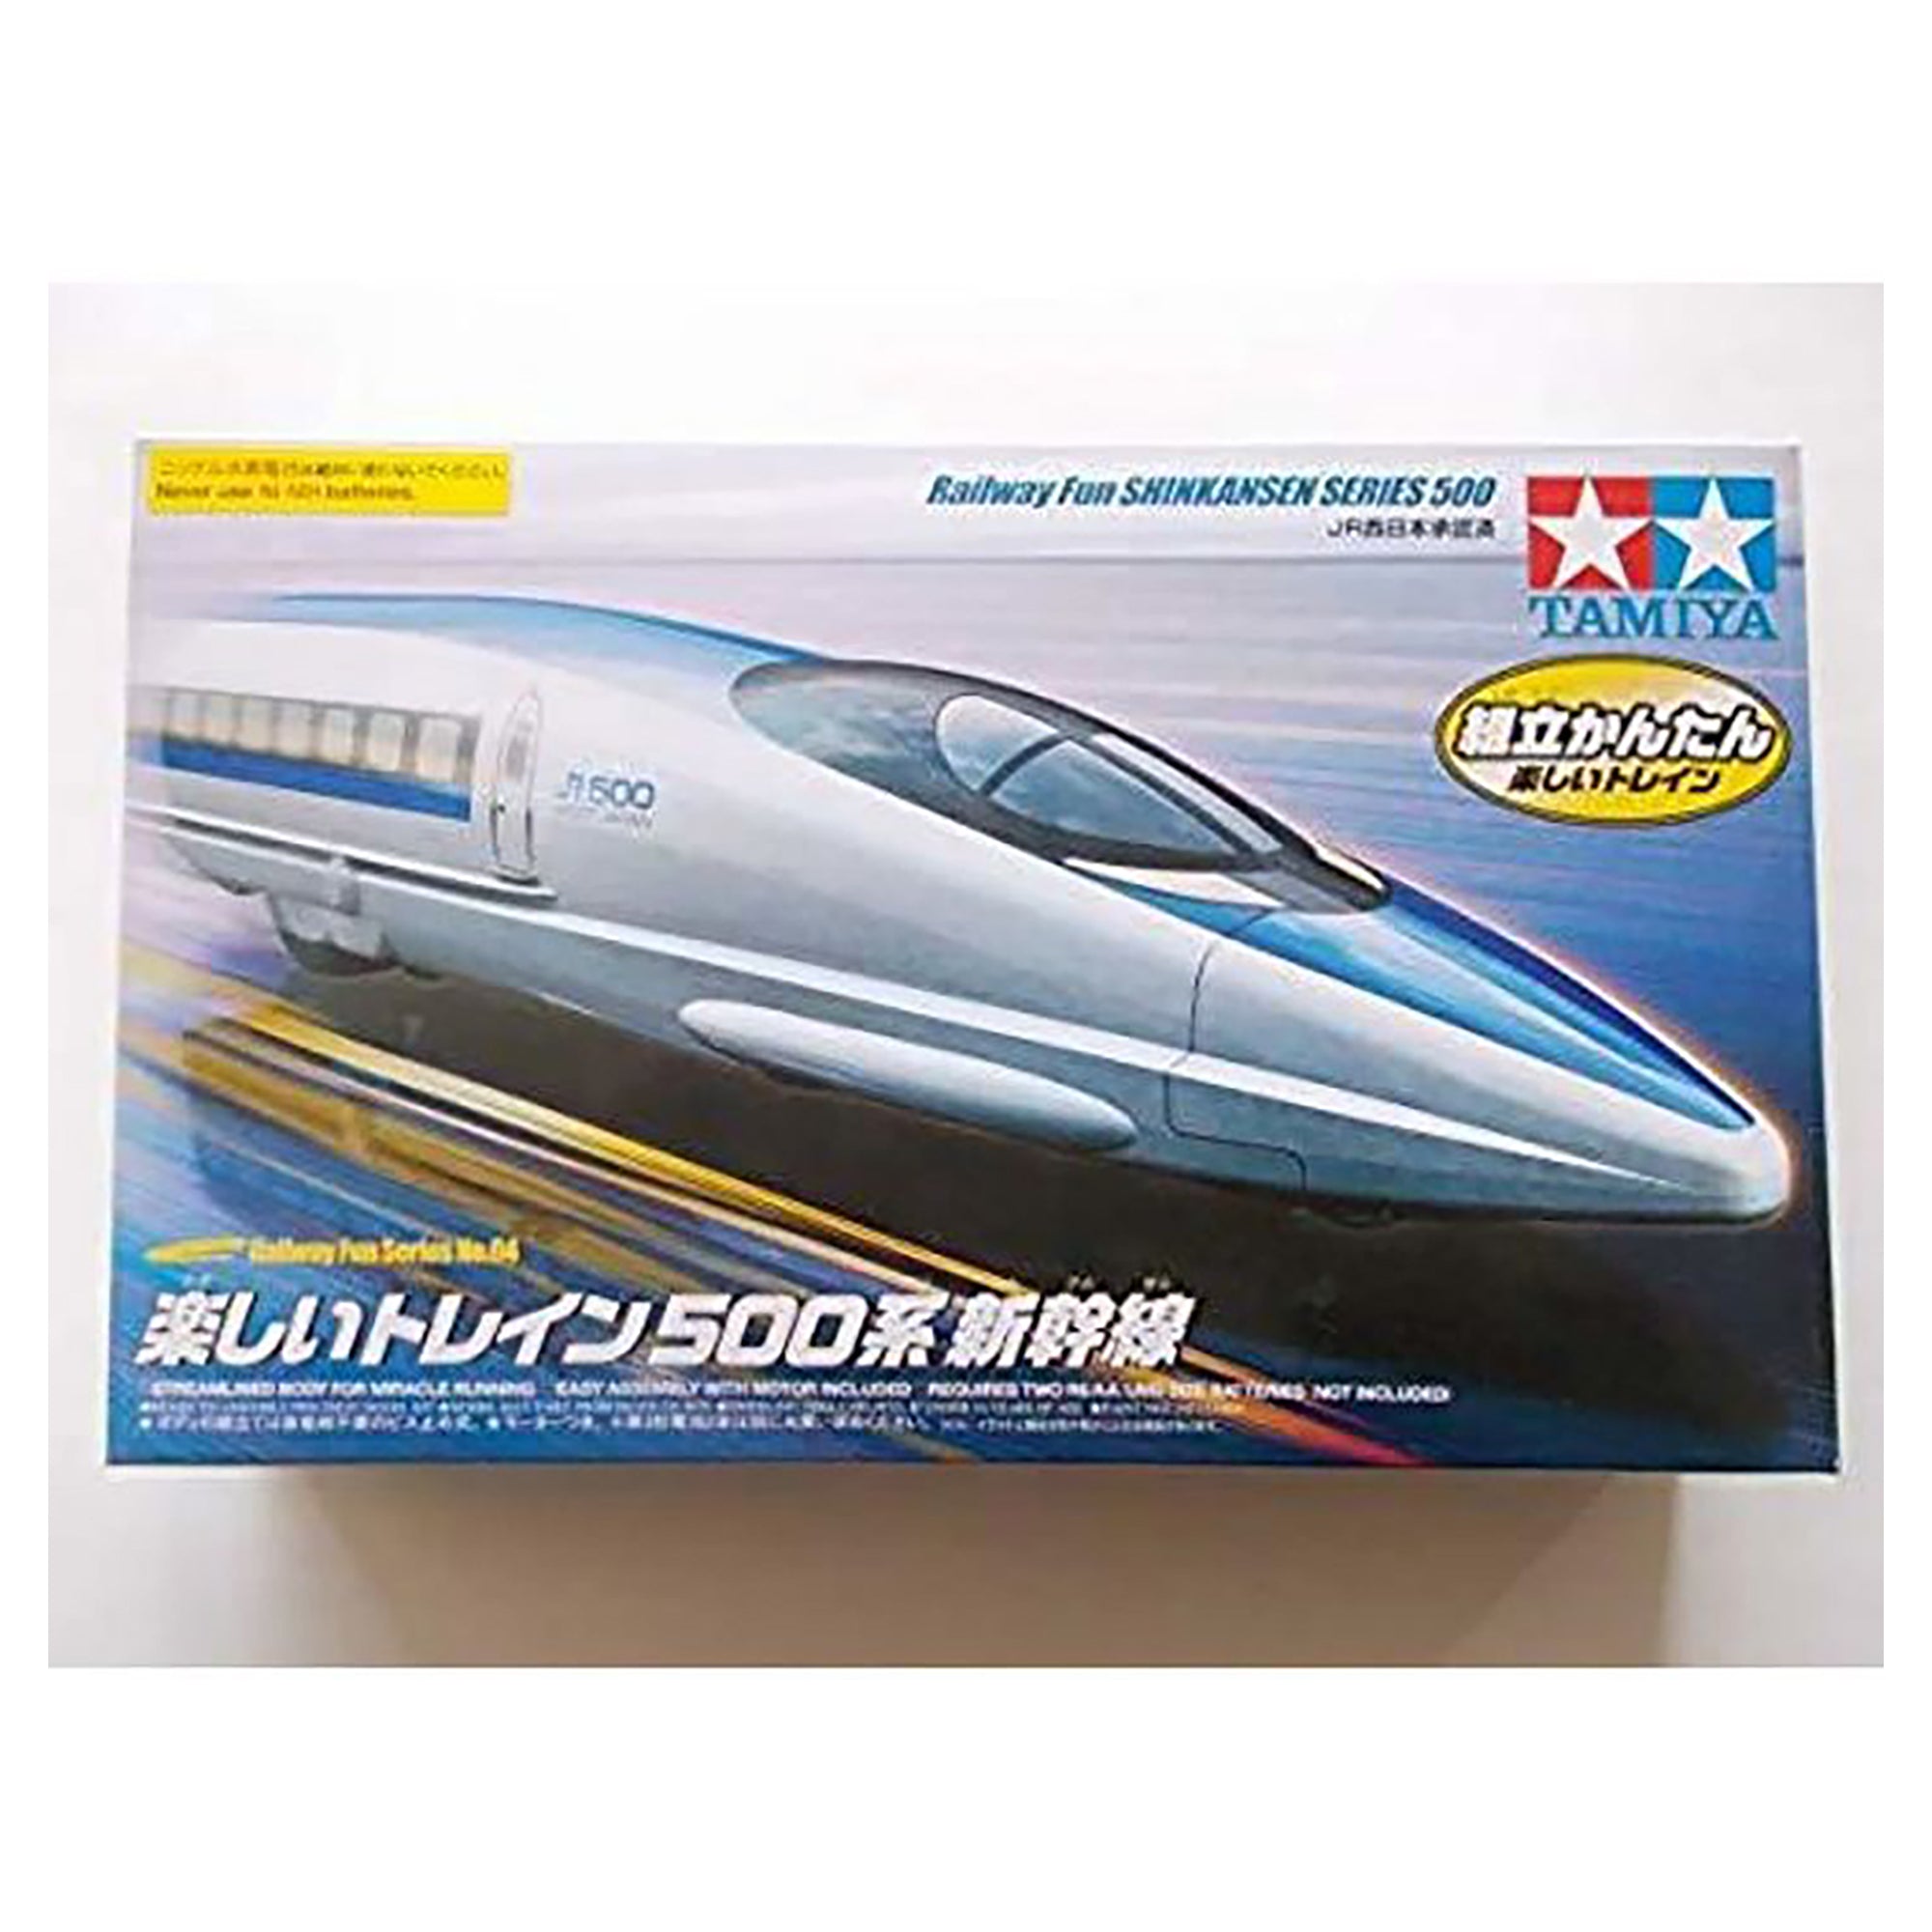 Tamiya 17804 Railway Fun Shinkansen Series 500 Model Kit